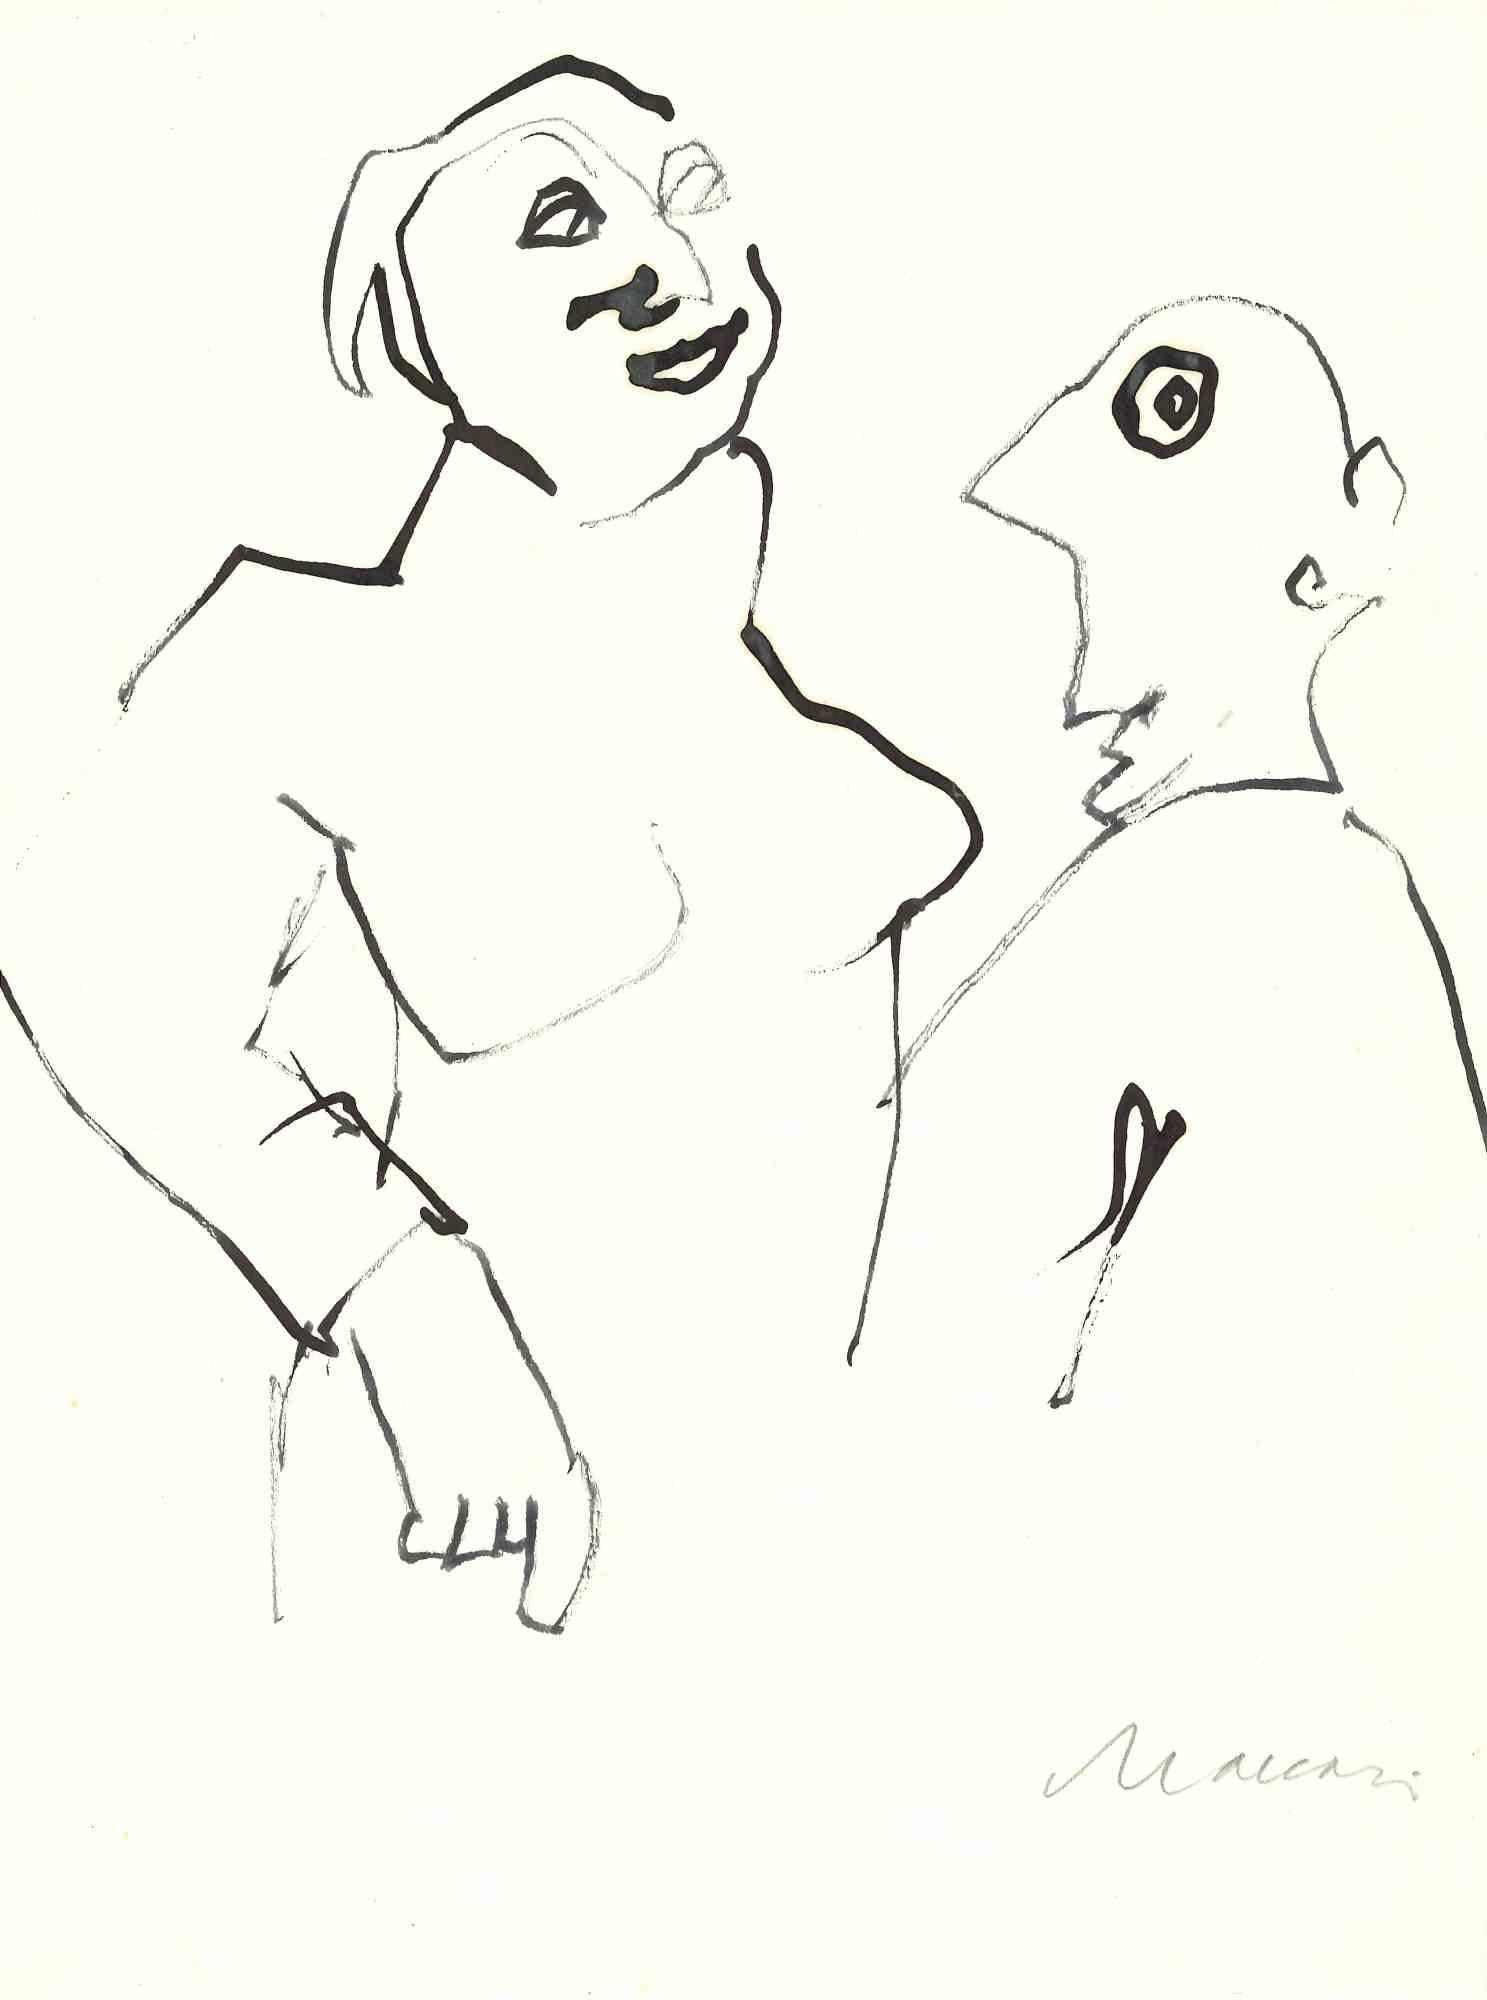 Bad News! - Original Drawing on Paper by Mino Maccari - 1970's